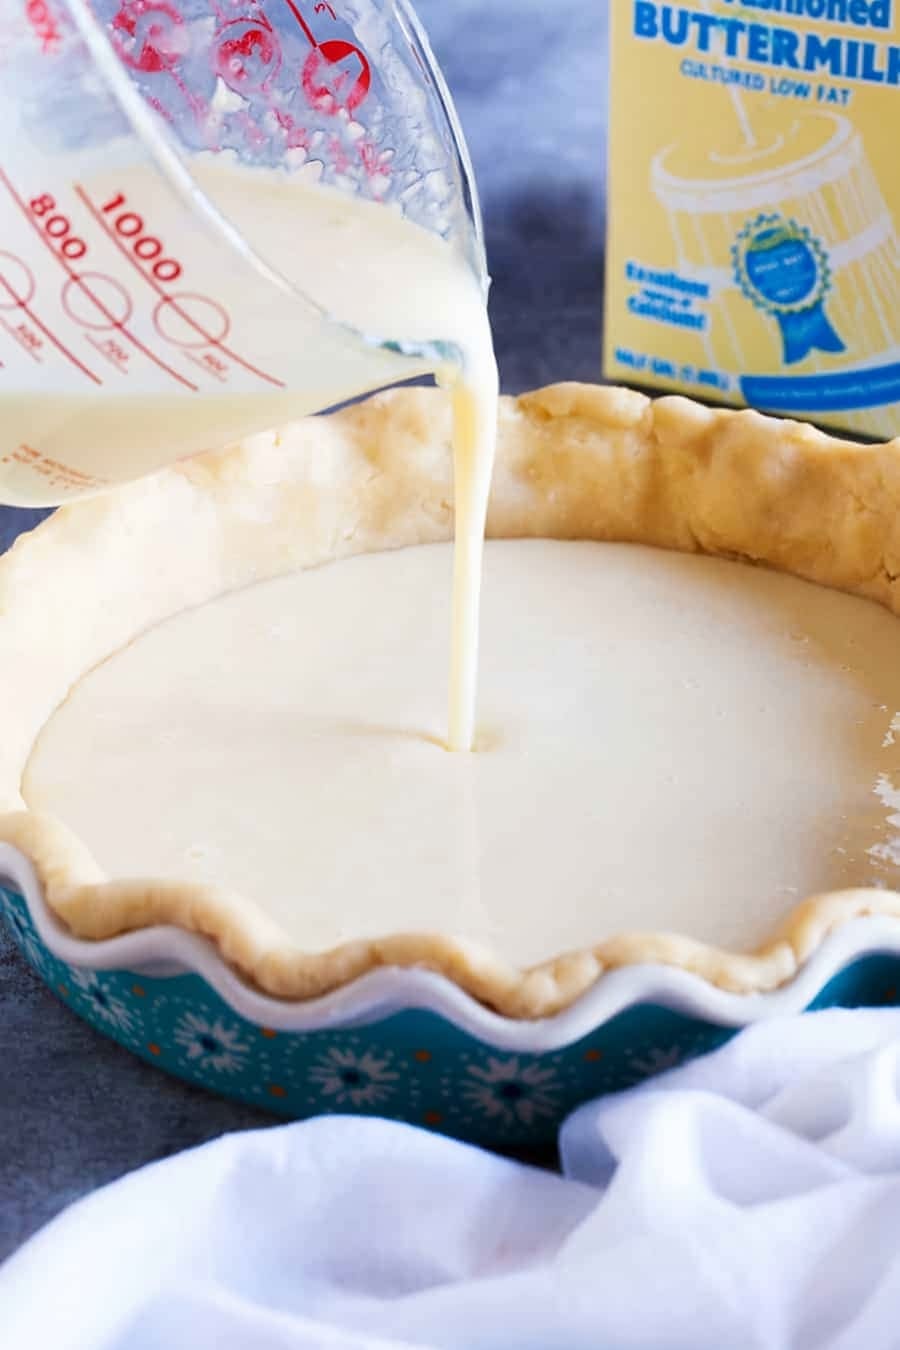 Amish Buttermilk Pie: A Creamy Delight